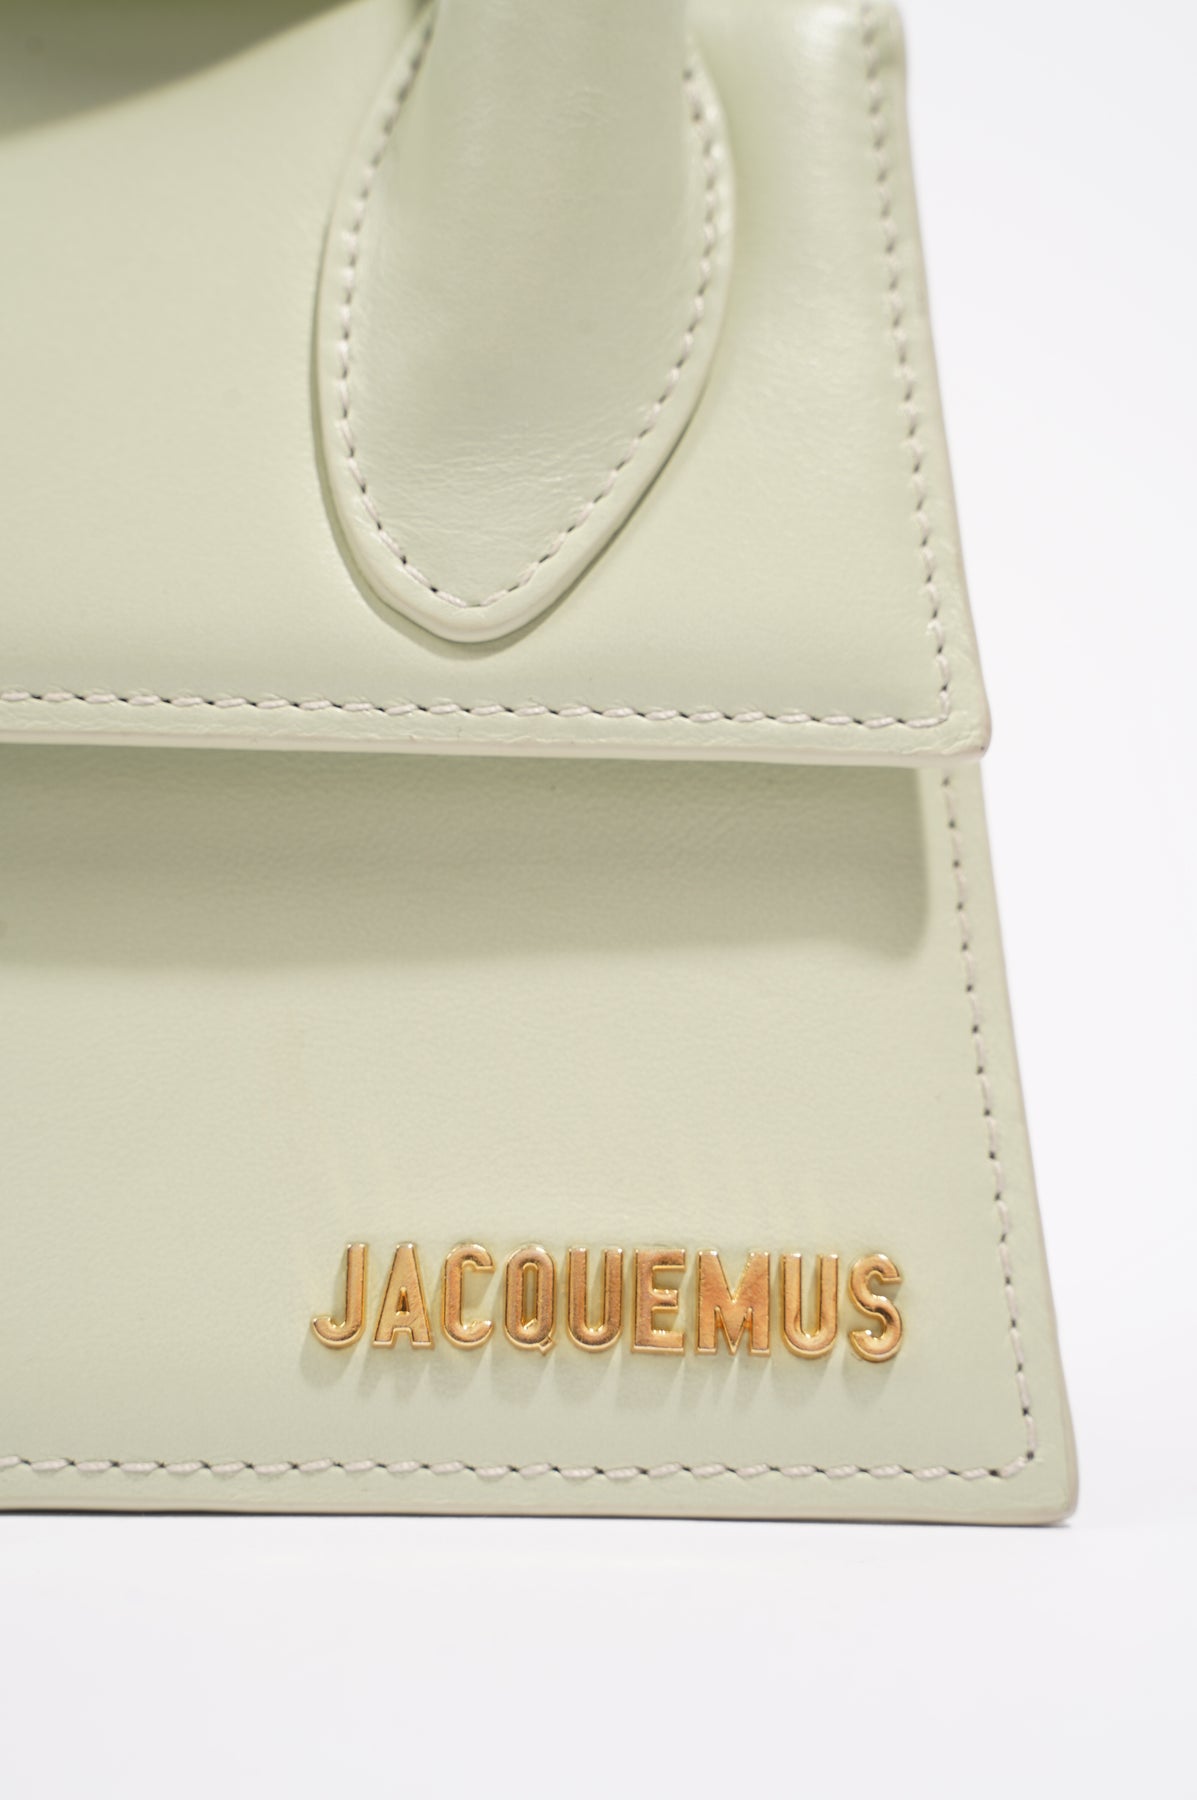 Jacquemus Le Chiquito Noeud Coiled Handbag Light Green